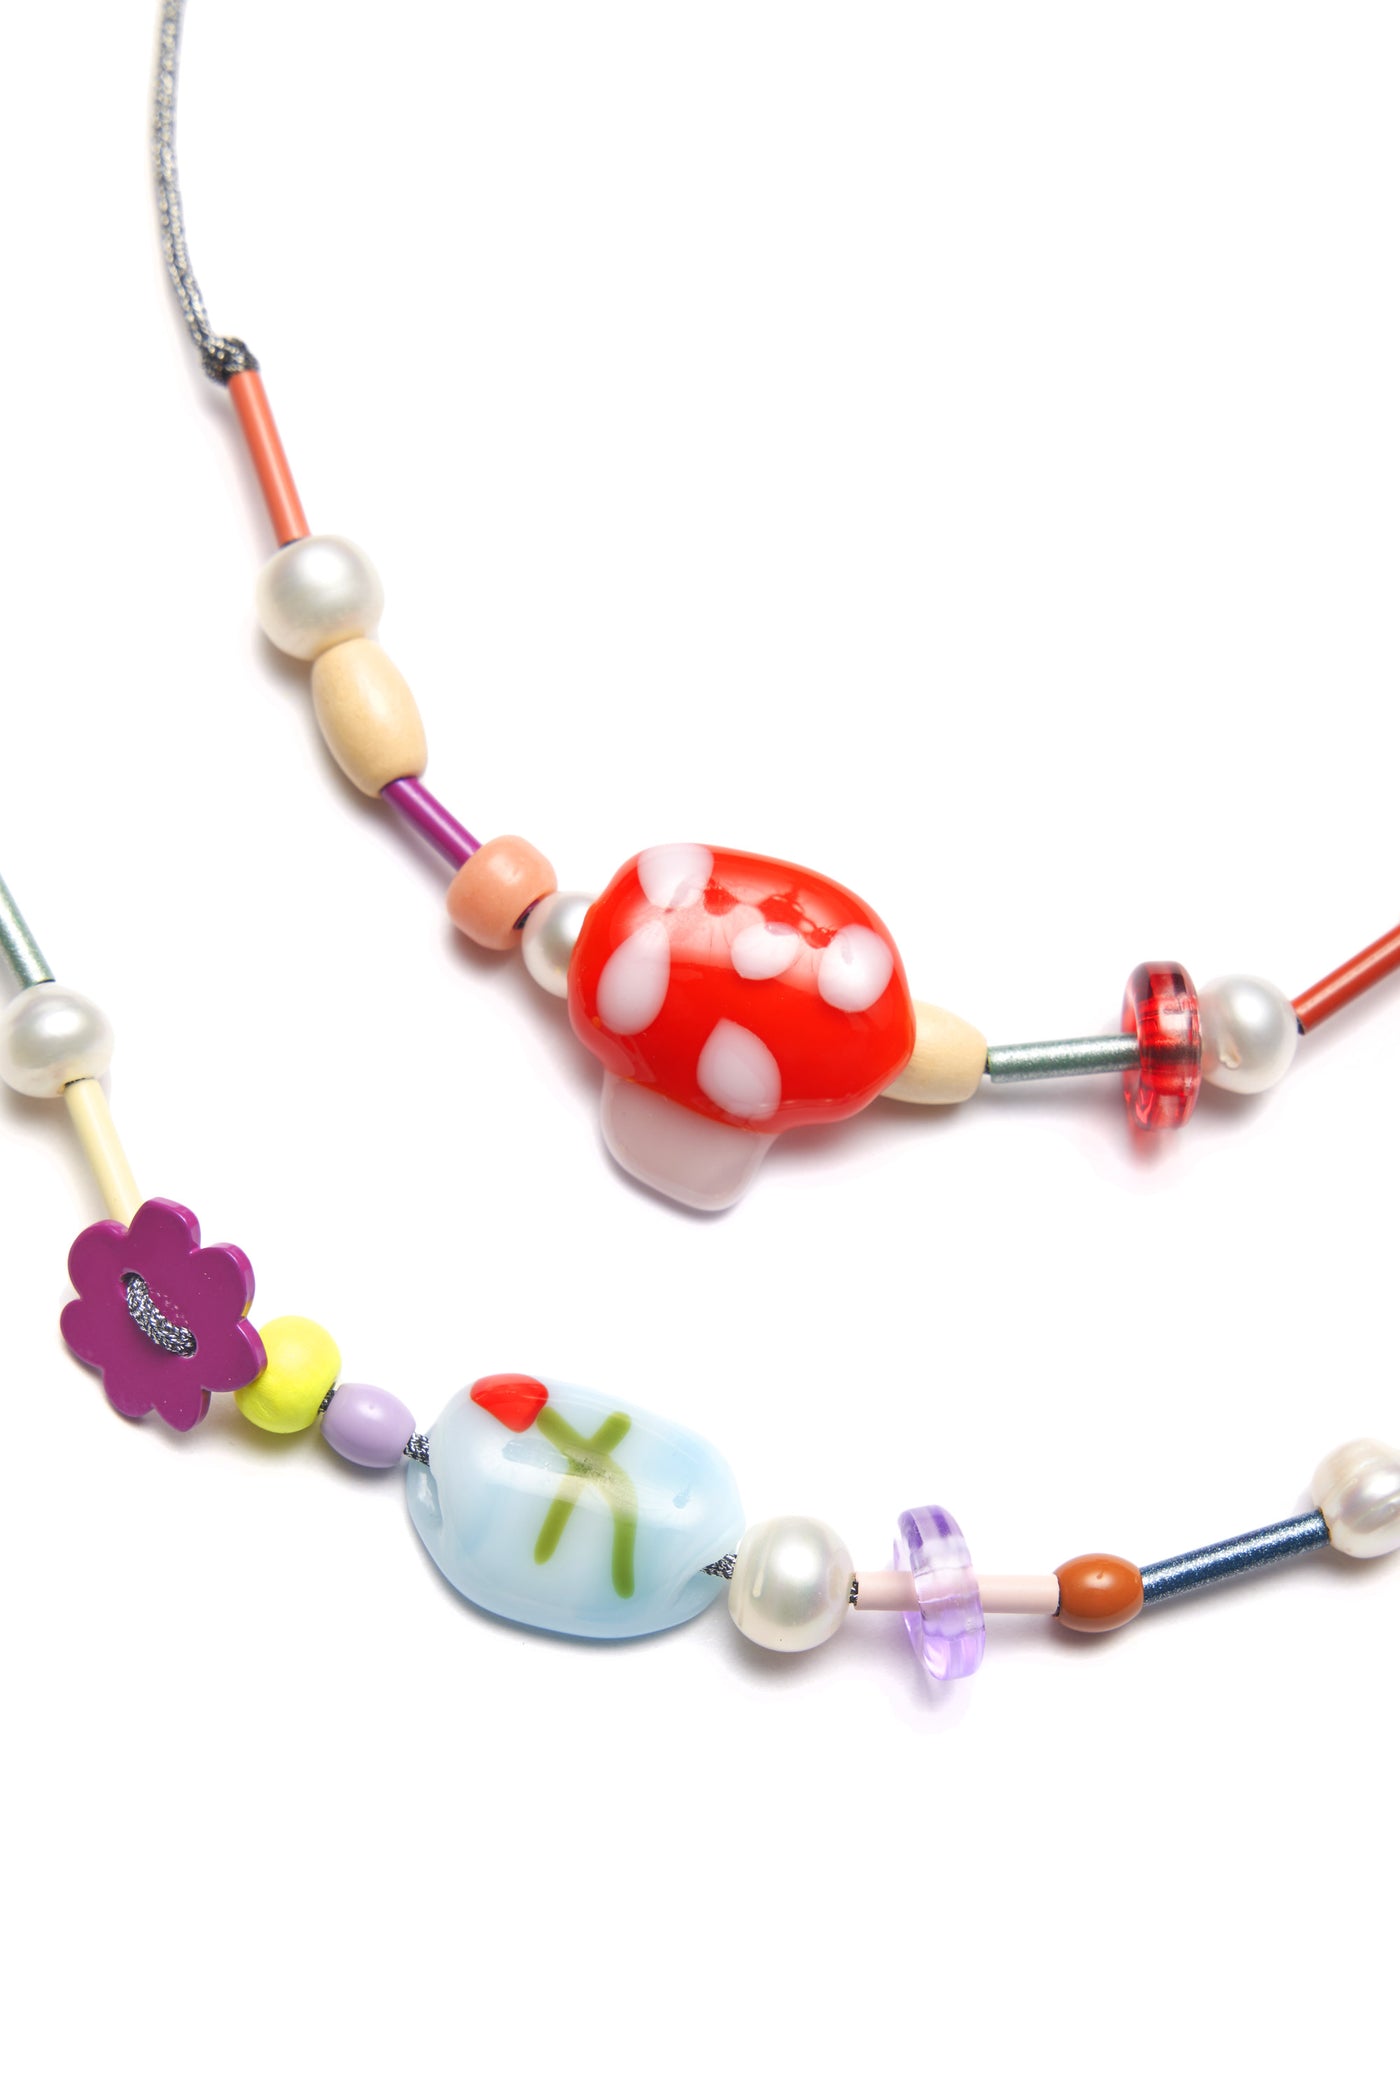 Bianca Mavrick x Lawn Bowls Collaboration Rose and Mushroom Bracelet Glass Jewellery